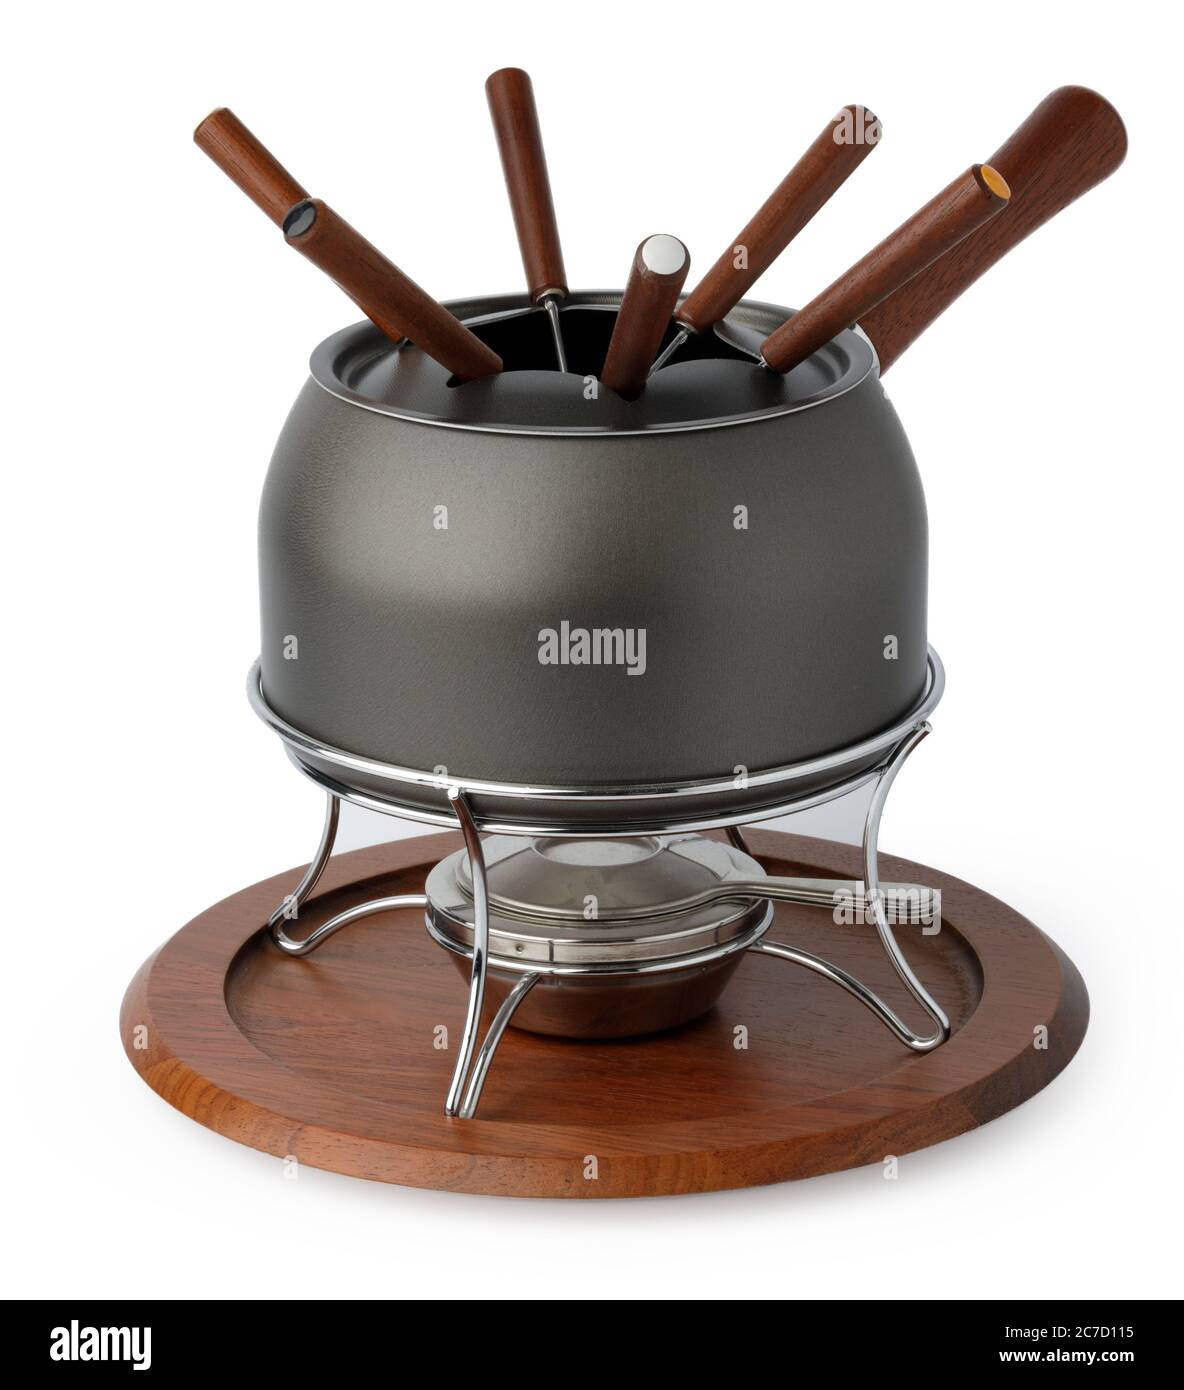 https://c8.alamy.com/comp/2C7D115/metal-cookware-for-fondue-preparation-on-white-2C7D115.jpg